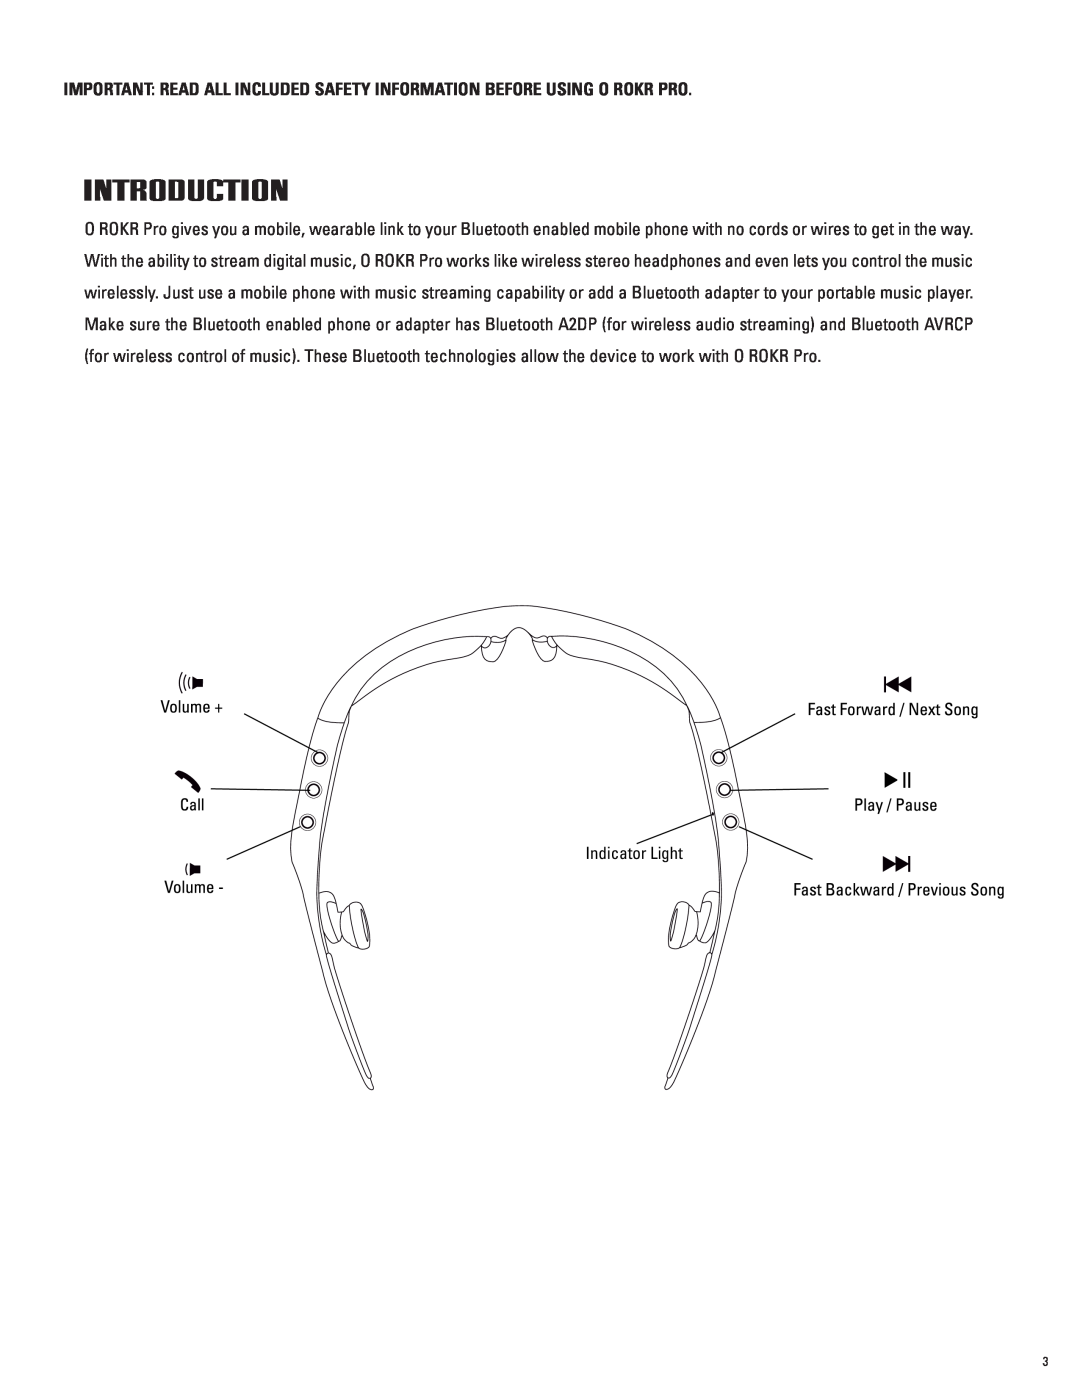 Oakley O ROKR Pro manual Introduction, Indicator Light 